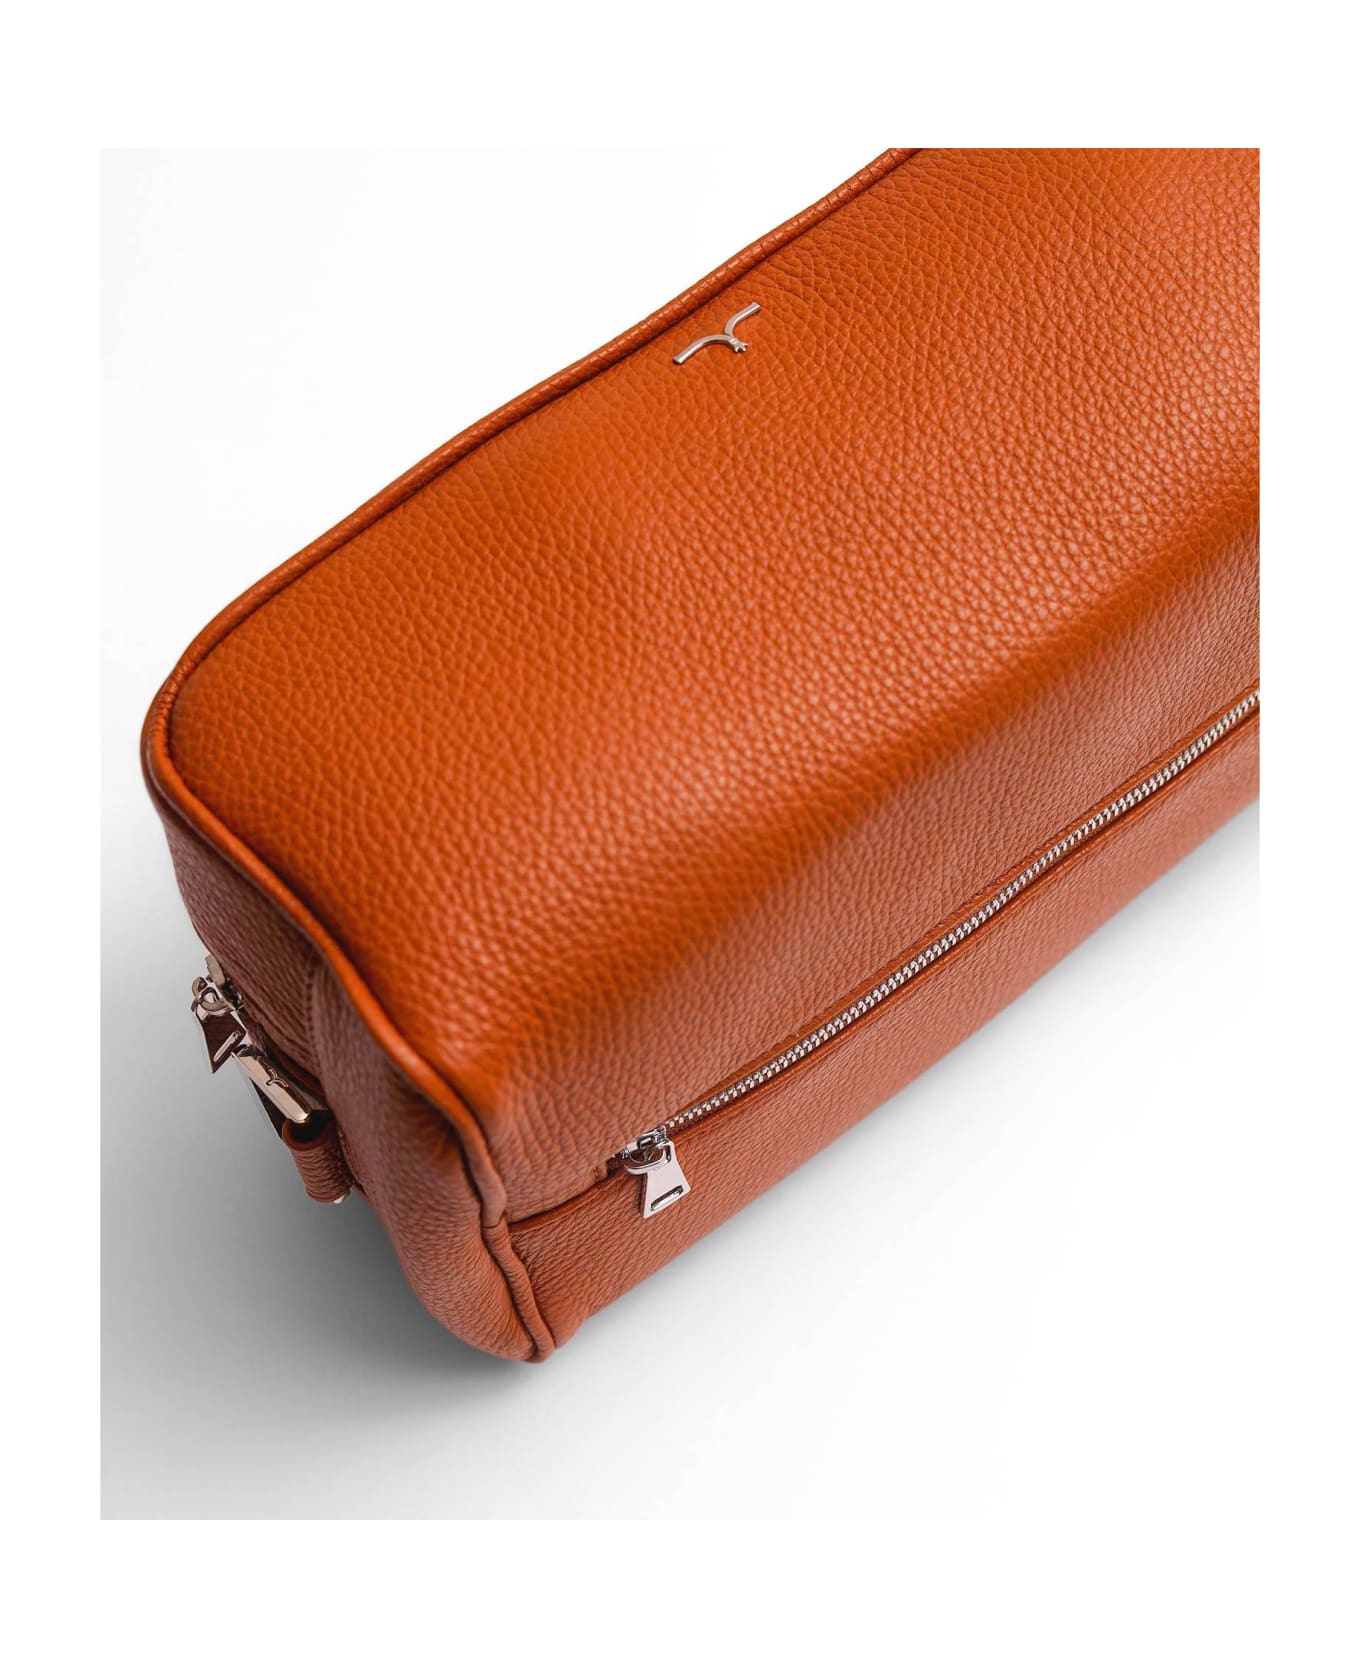 Larusmiani Wash Bag 'tzar' Luggage - Orange トラベルバッグ